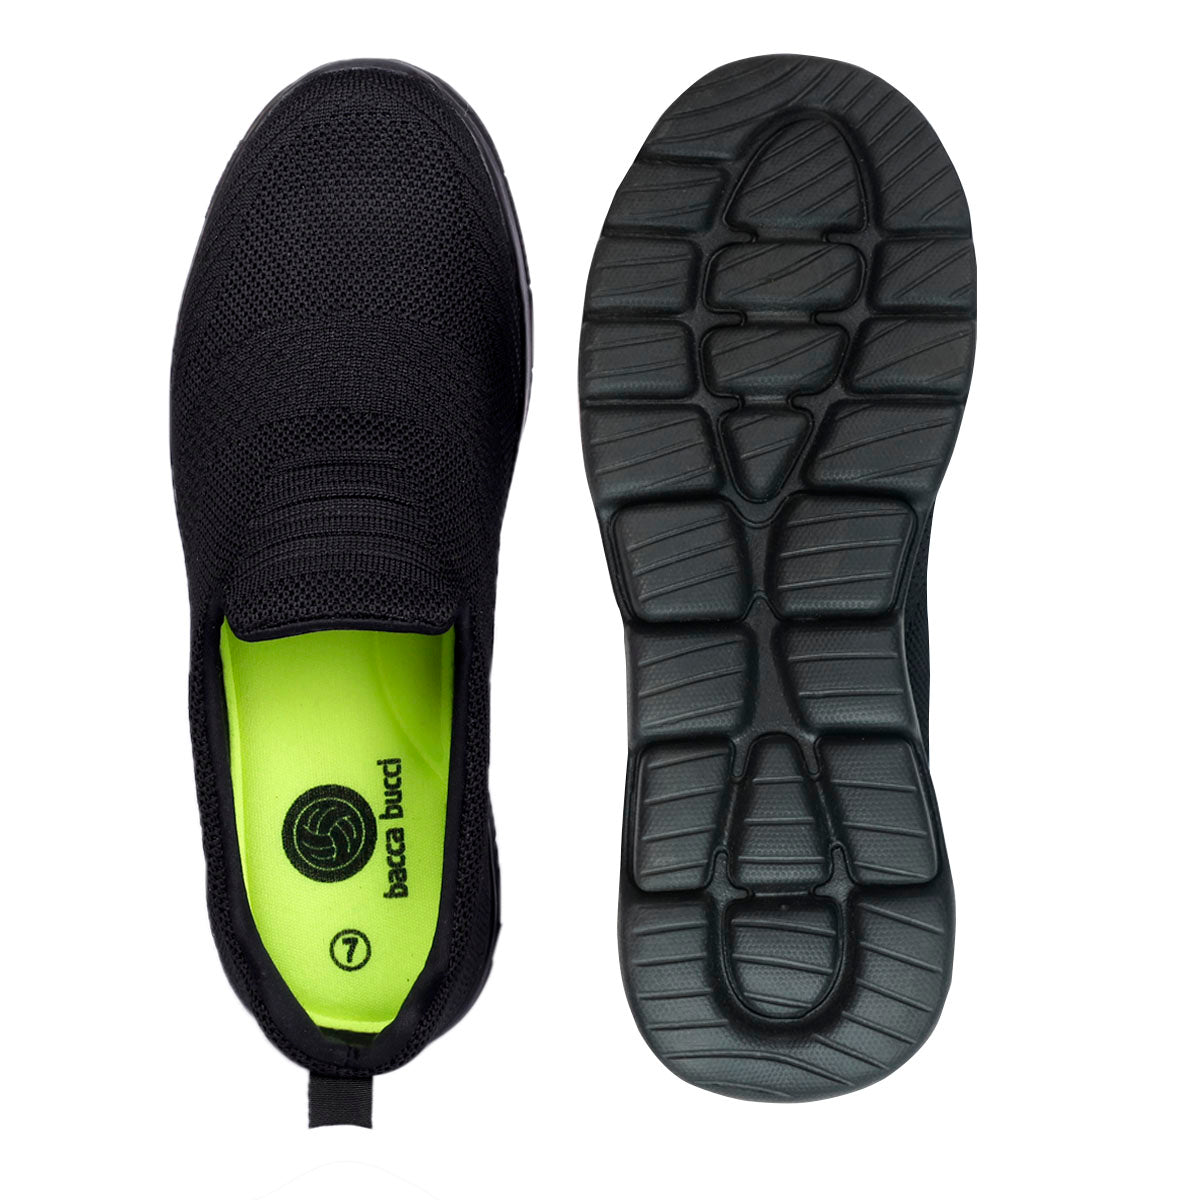 Bacca Bucci Walking Shoes for Men | Slip-on Shoes for Men